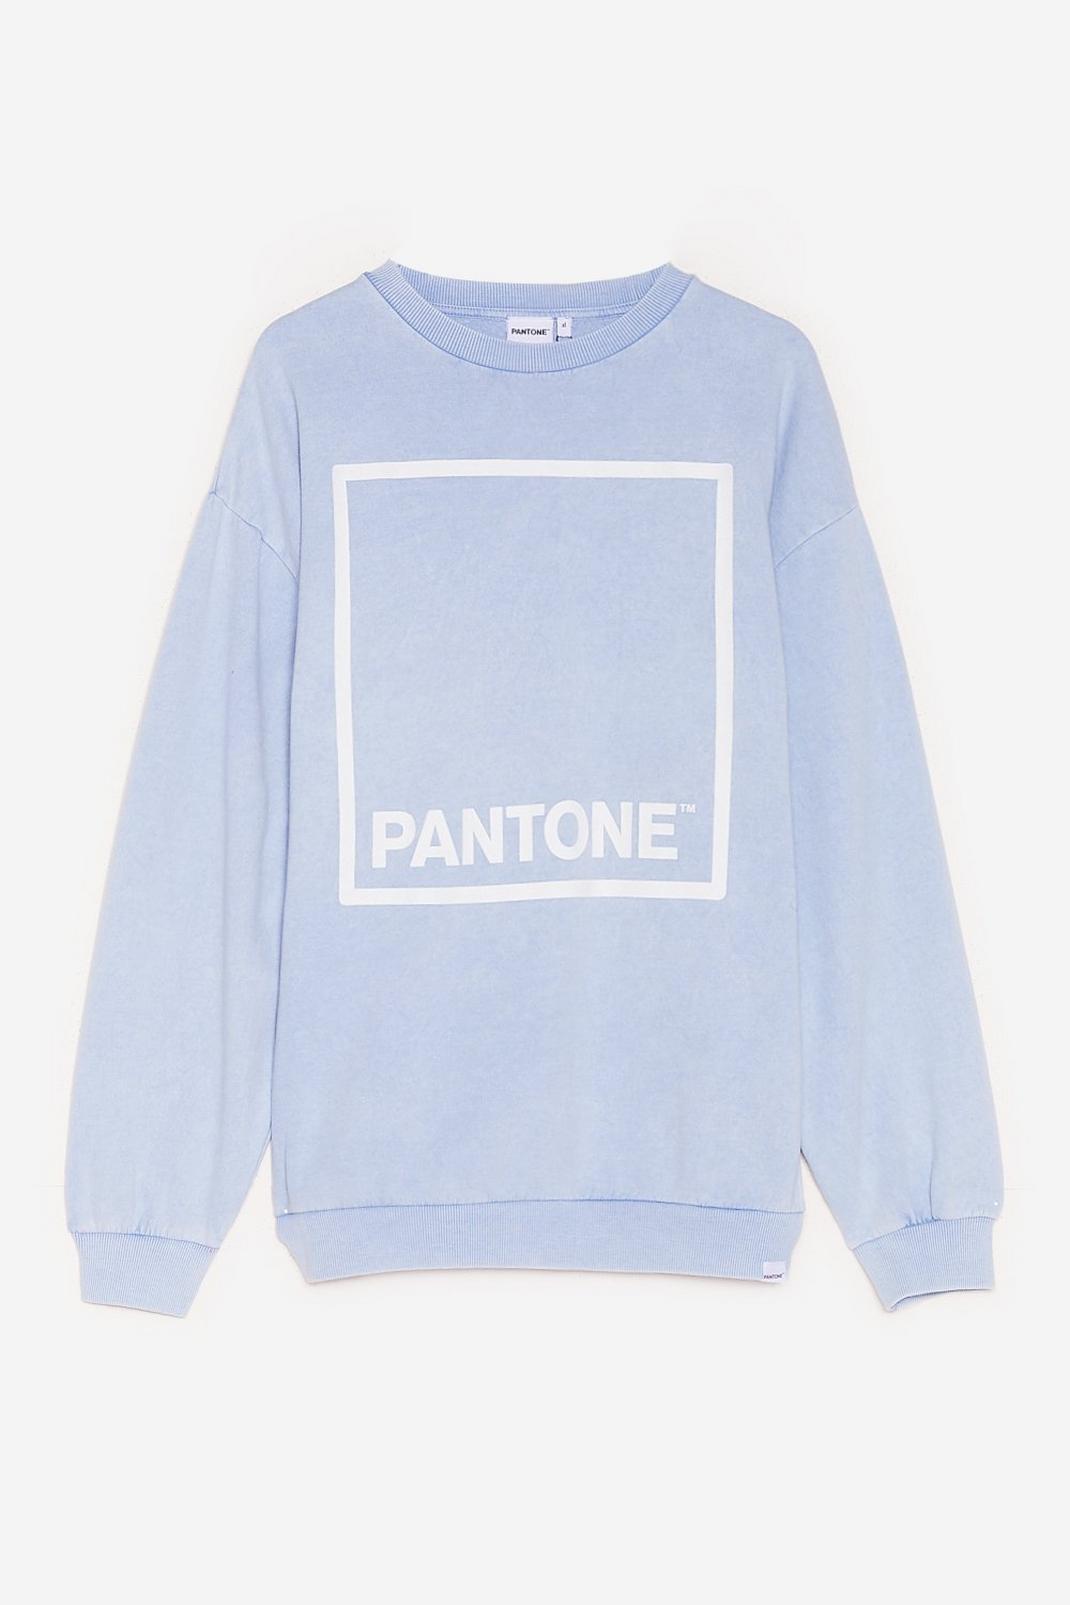 Blue Pantone Graphic Sweatshirt image number 1